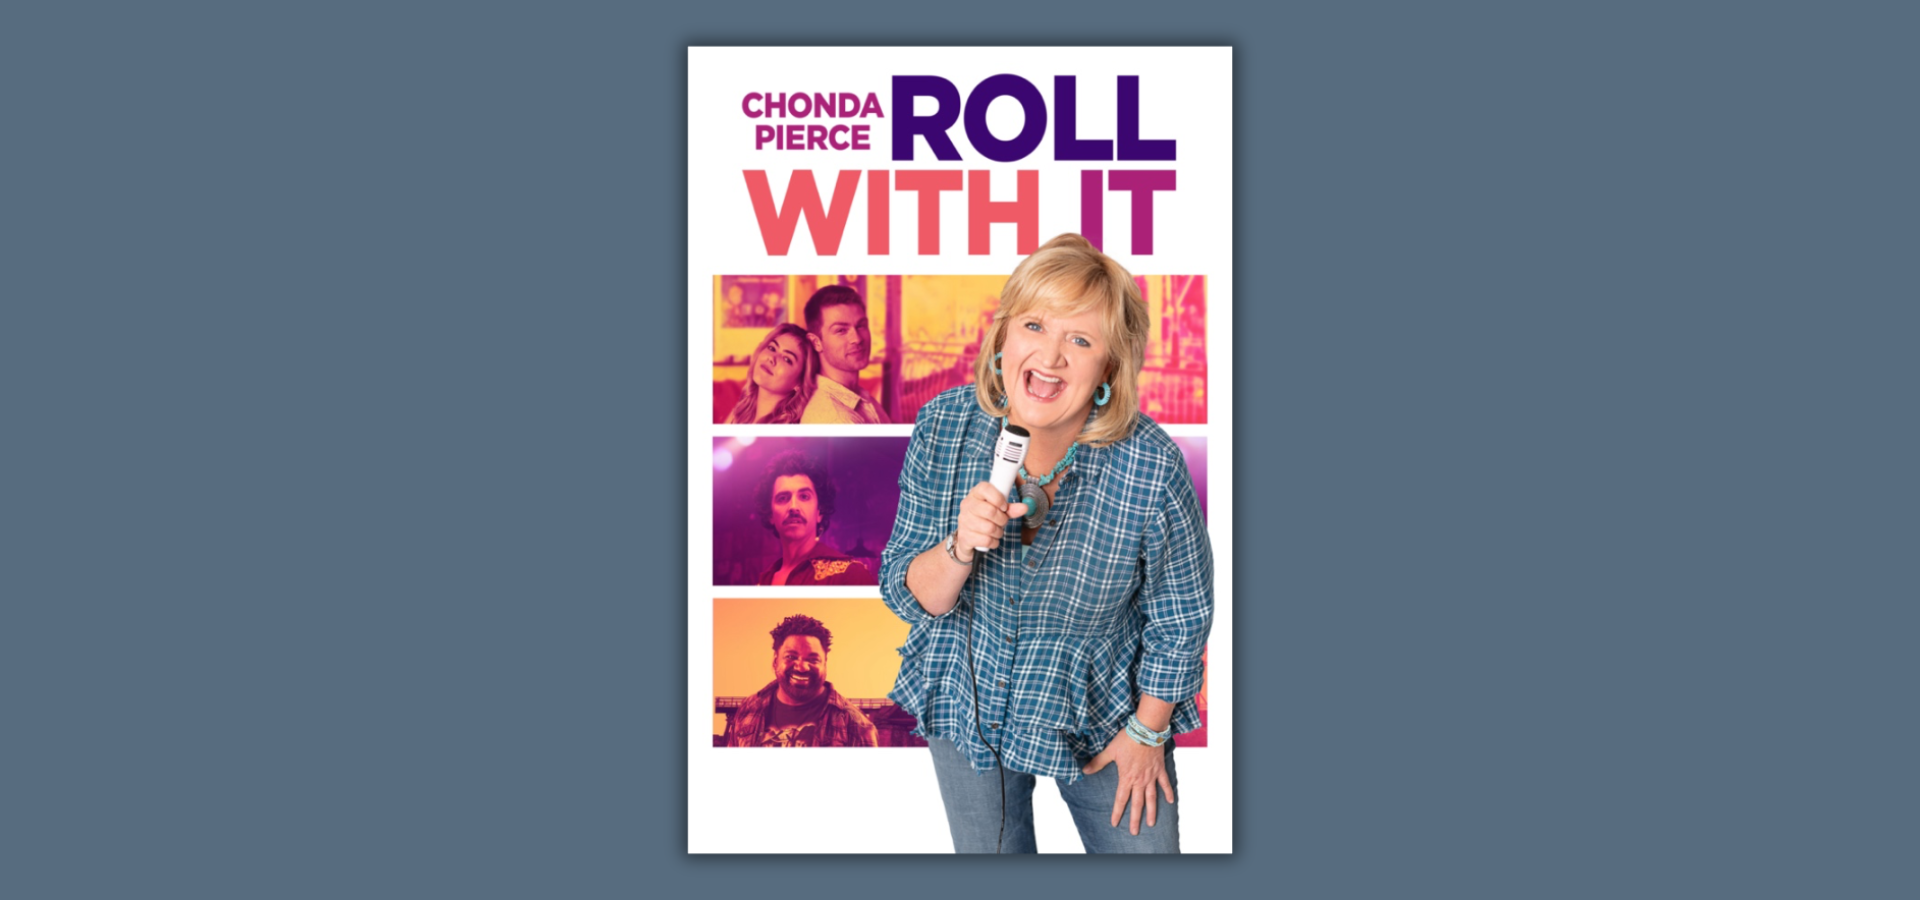 Chonda Pierce Releasing New Film, Roll With It